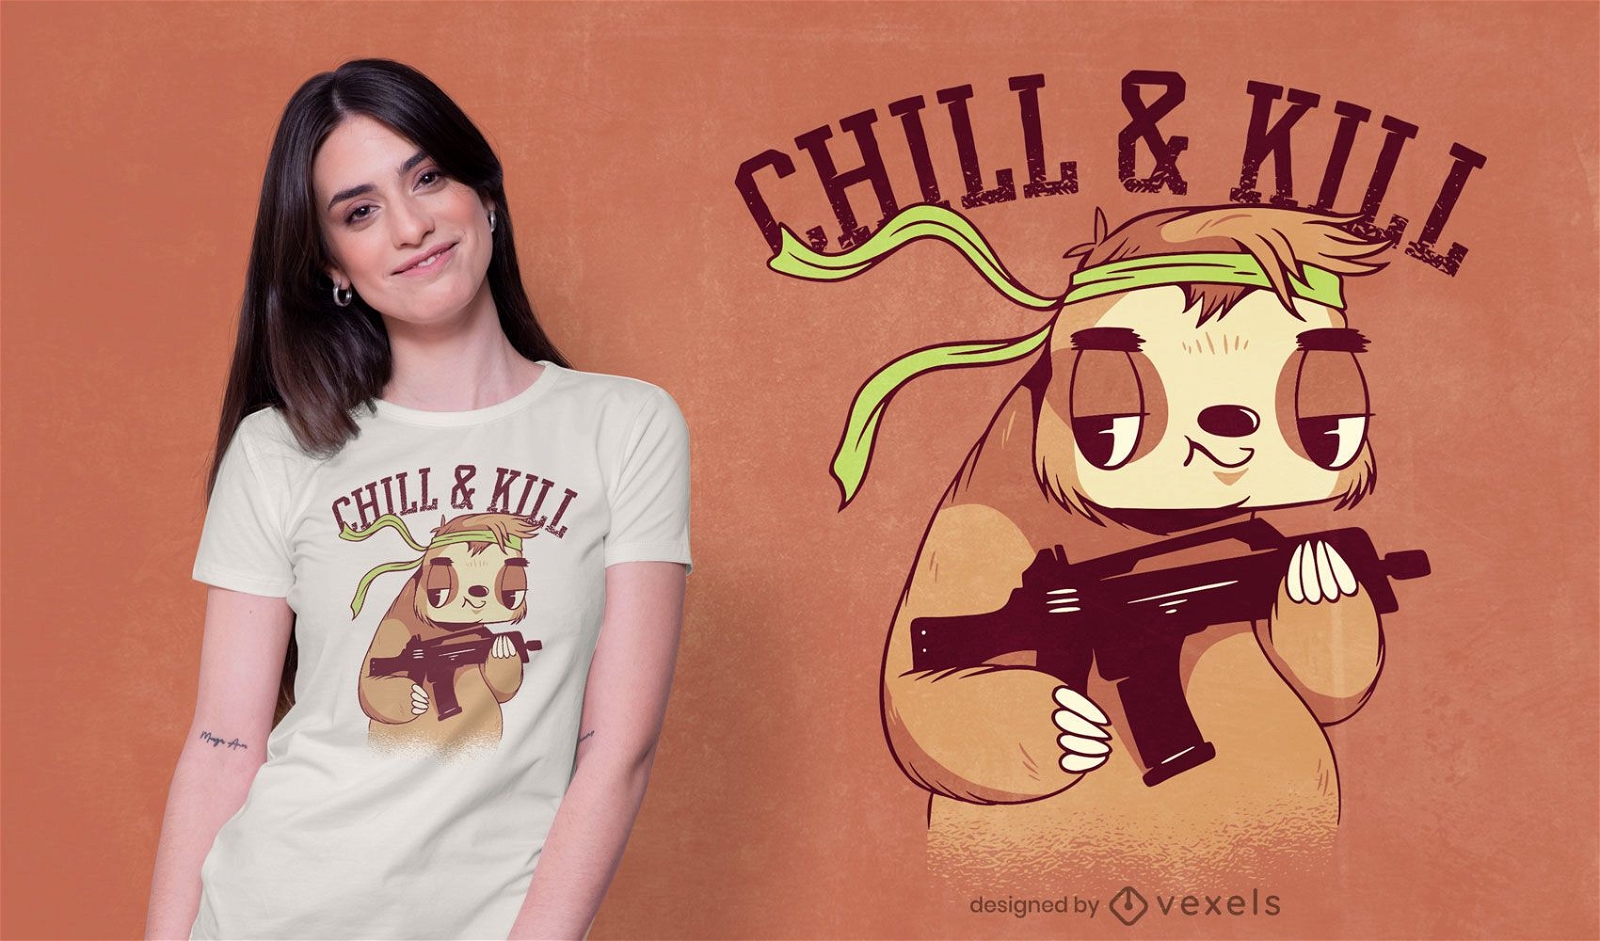 Chill & kill sloth t-shirt design